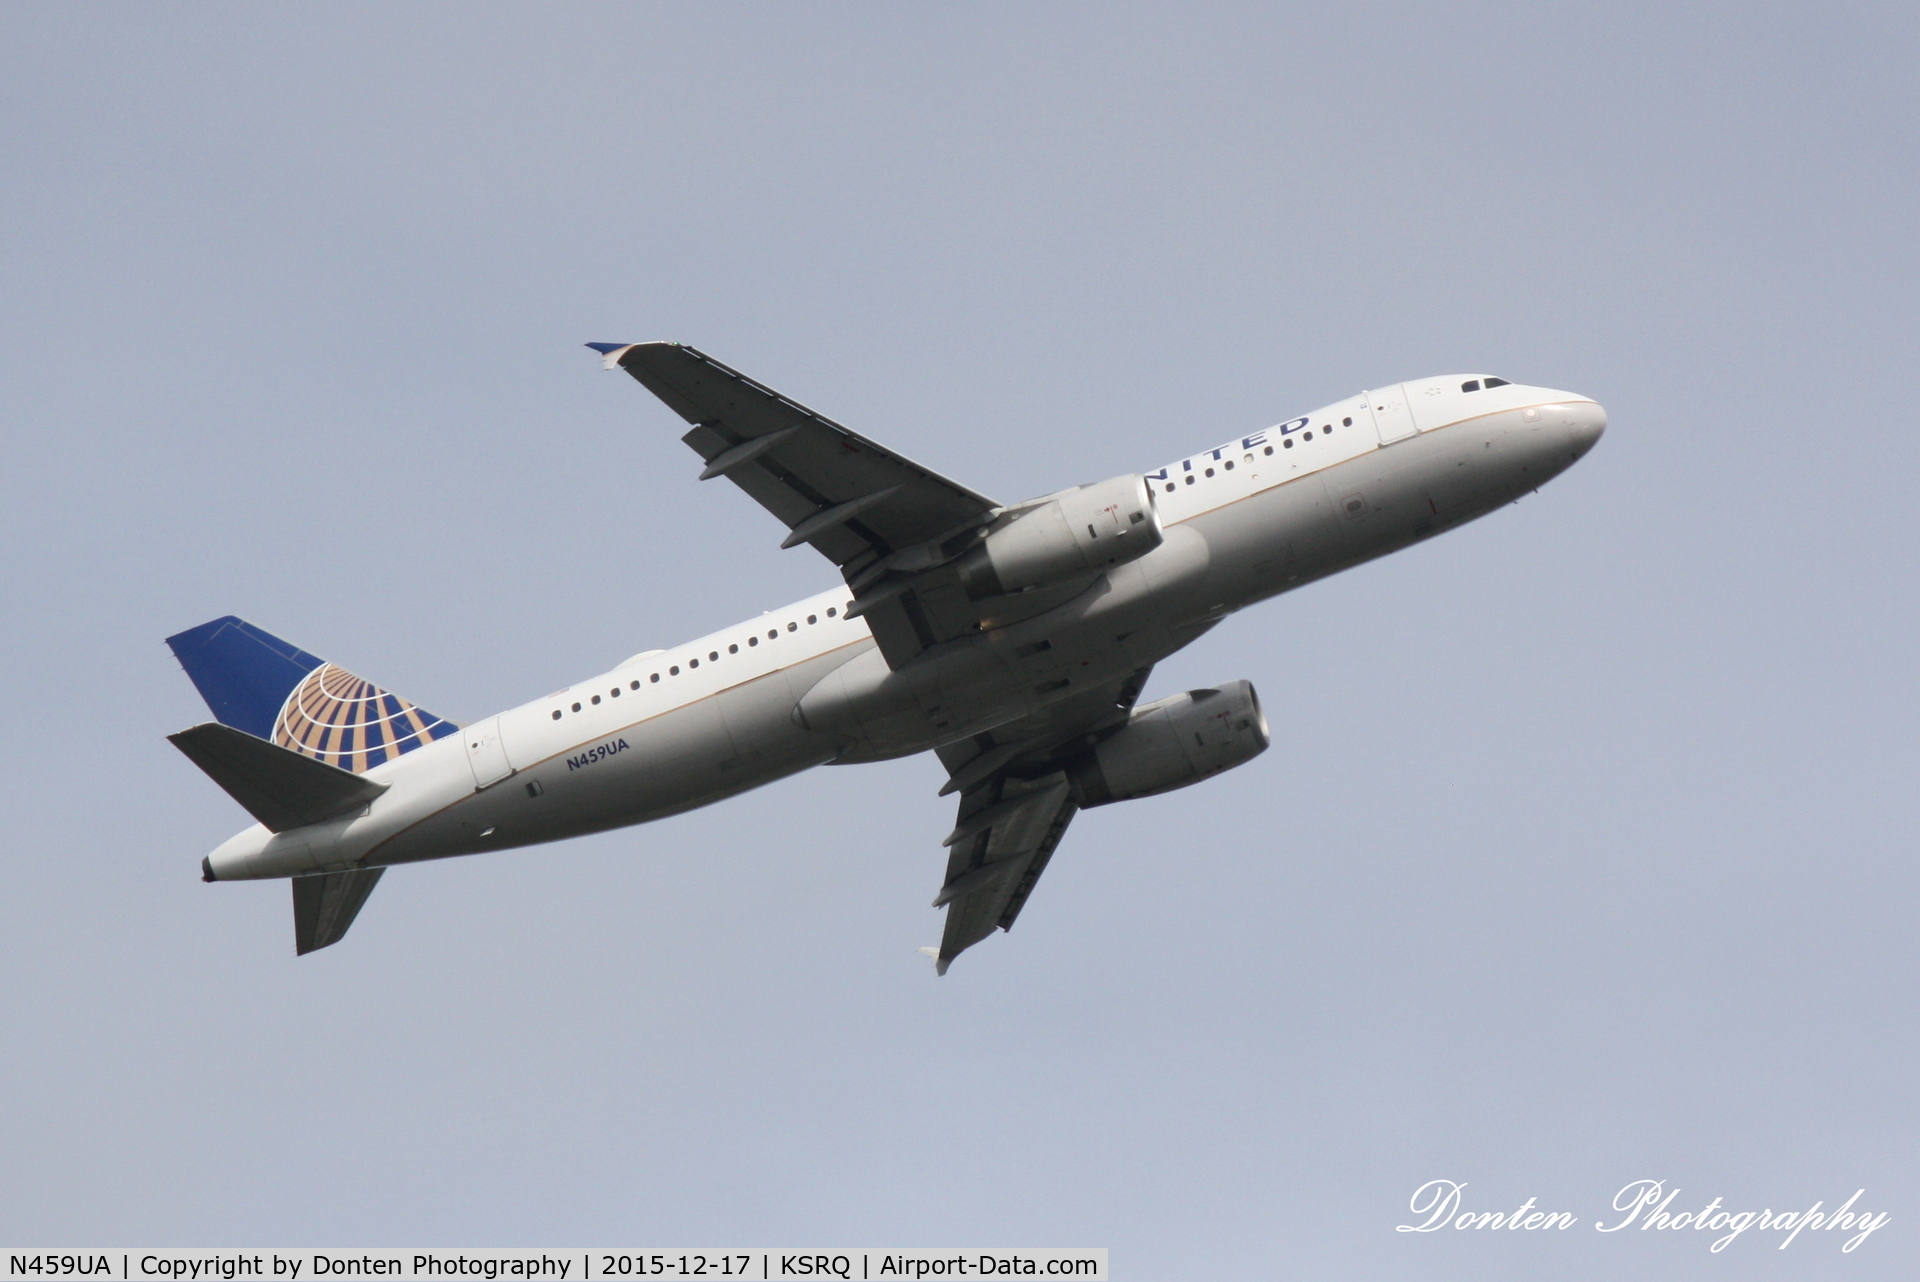 N459UA, 2000 Airbus A320-232 C/N 1192, United Flight 1641 (N459UA) departs Sarasota-Bradenton International Airport enroute to Chicago-O'Hare International Airport